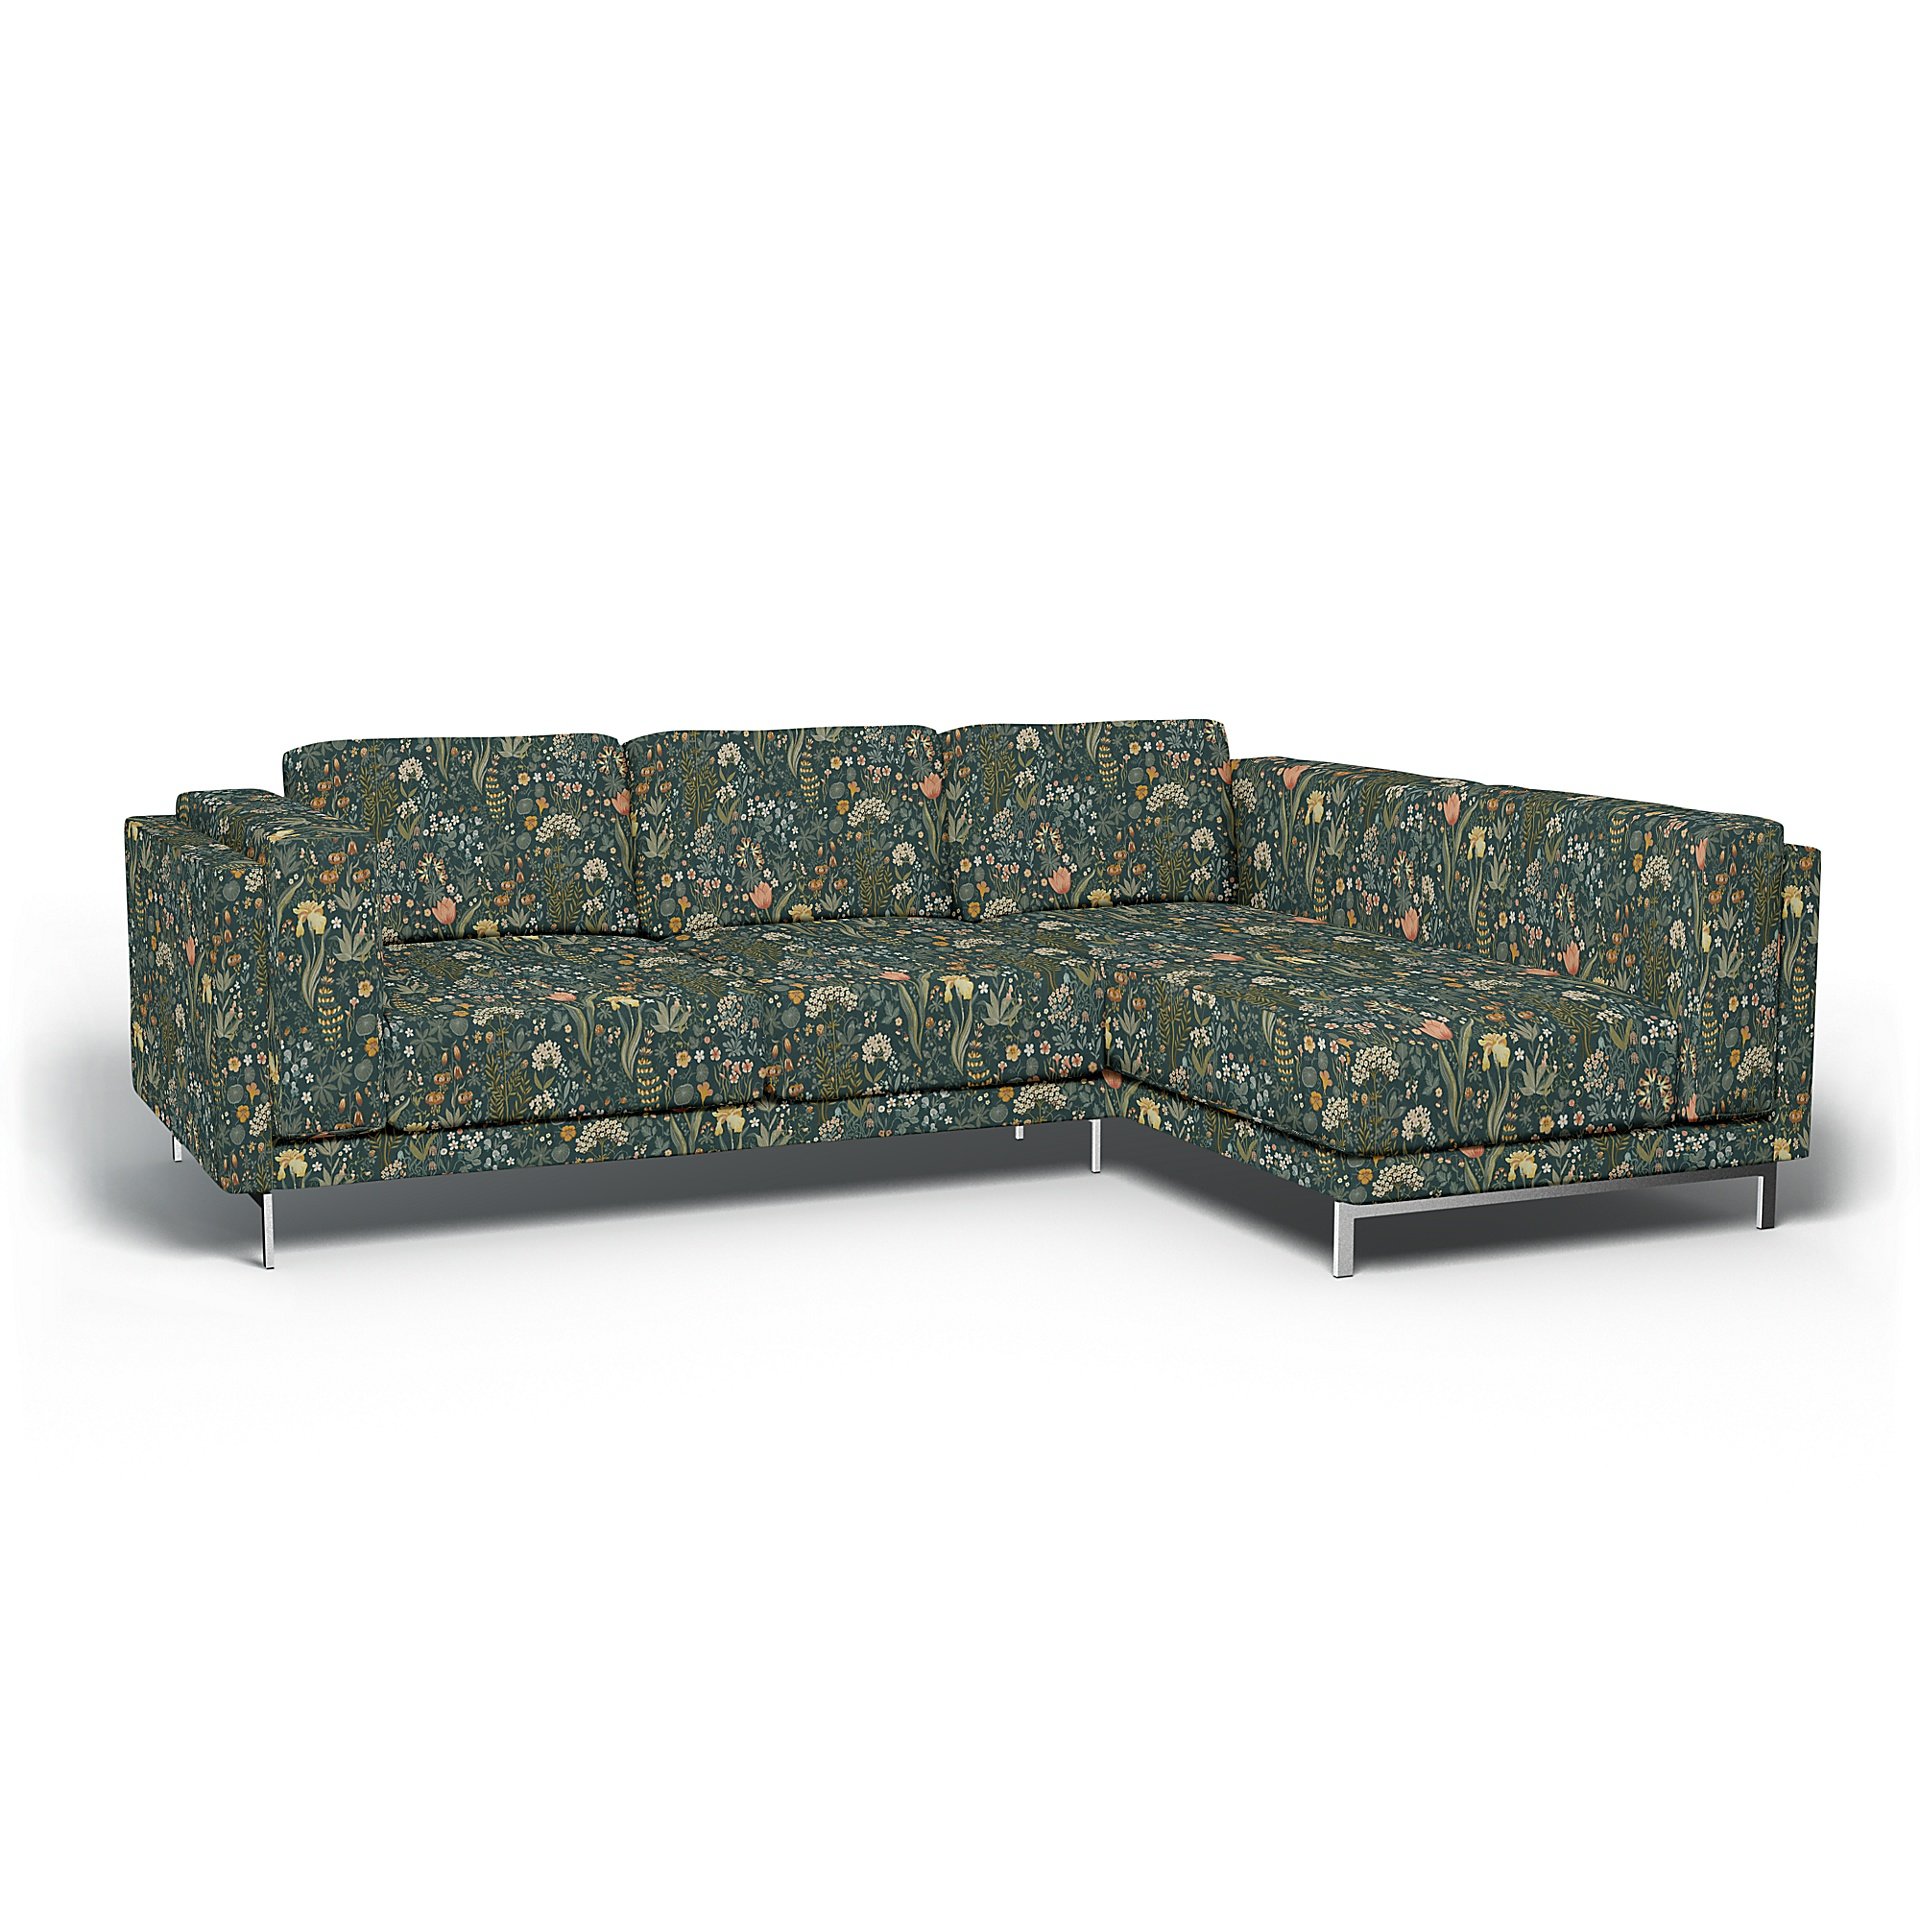 IKEA - Nockeby 3 Seat Sofa with Right Chaise Cover, Blomsterhav Dark, BEMZ x BORASTAPETER COLLECTION